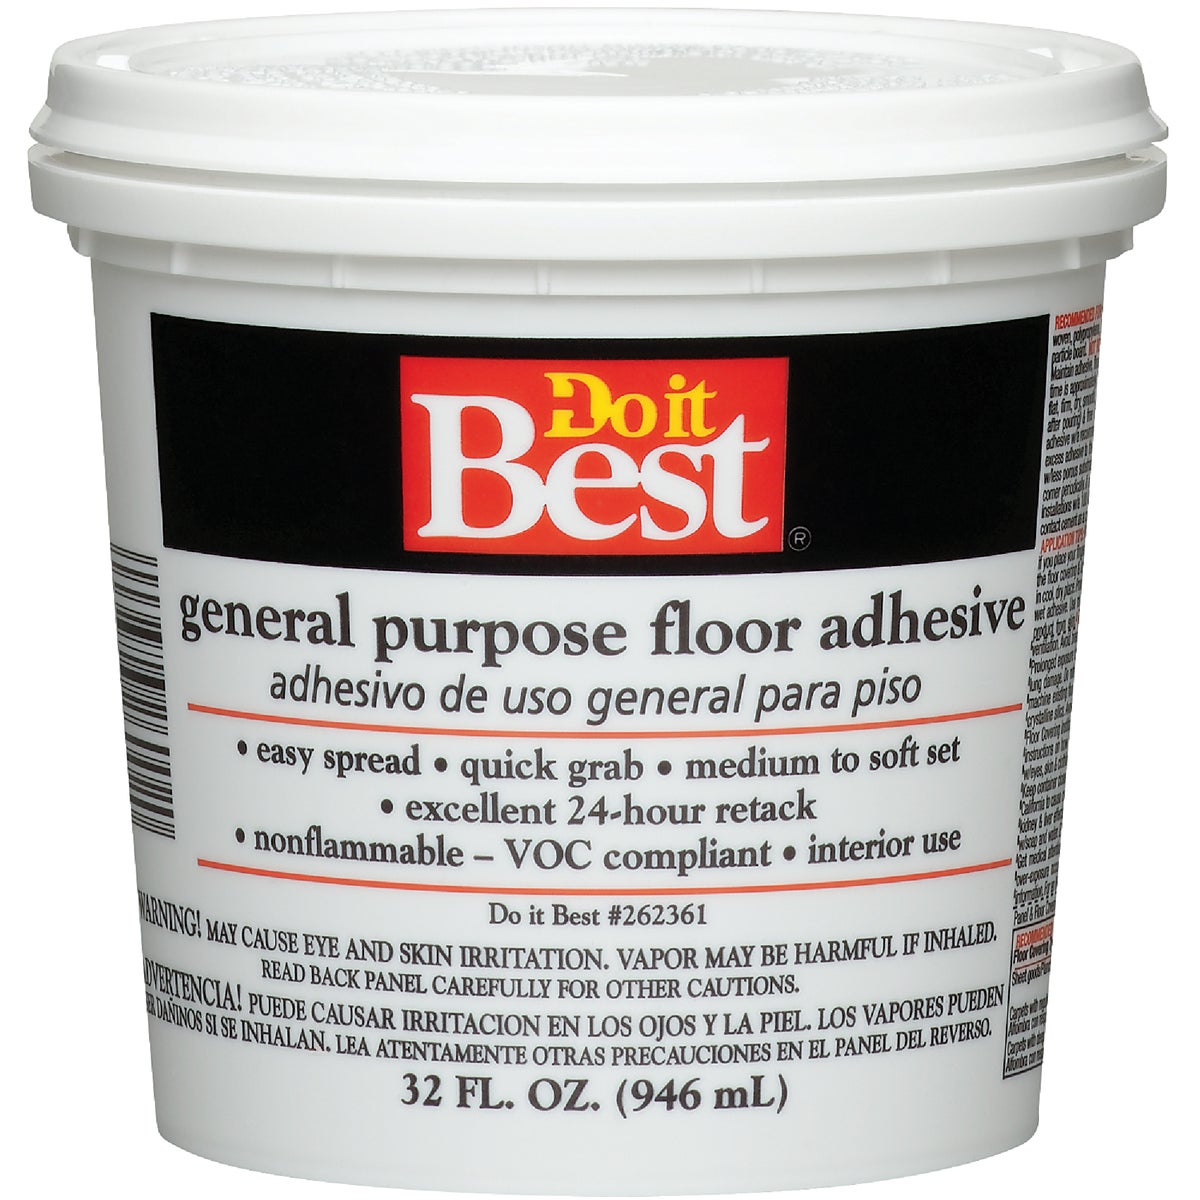 Item 262361, Versatile indoor flooring adhesive. Water-resistant.